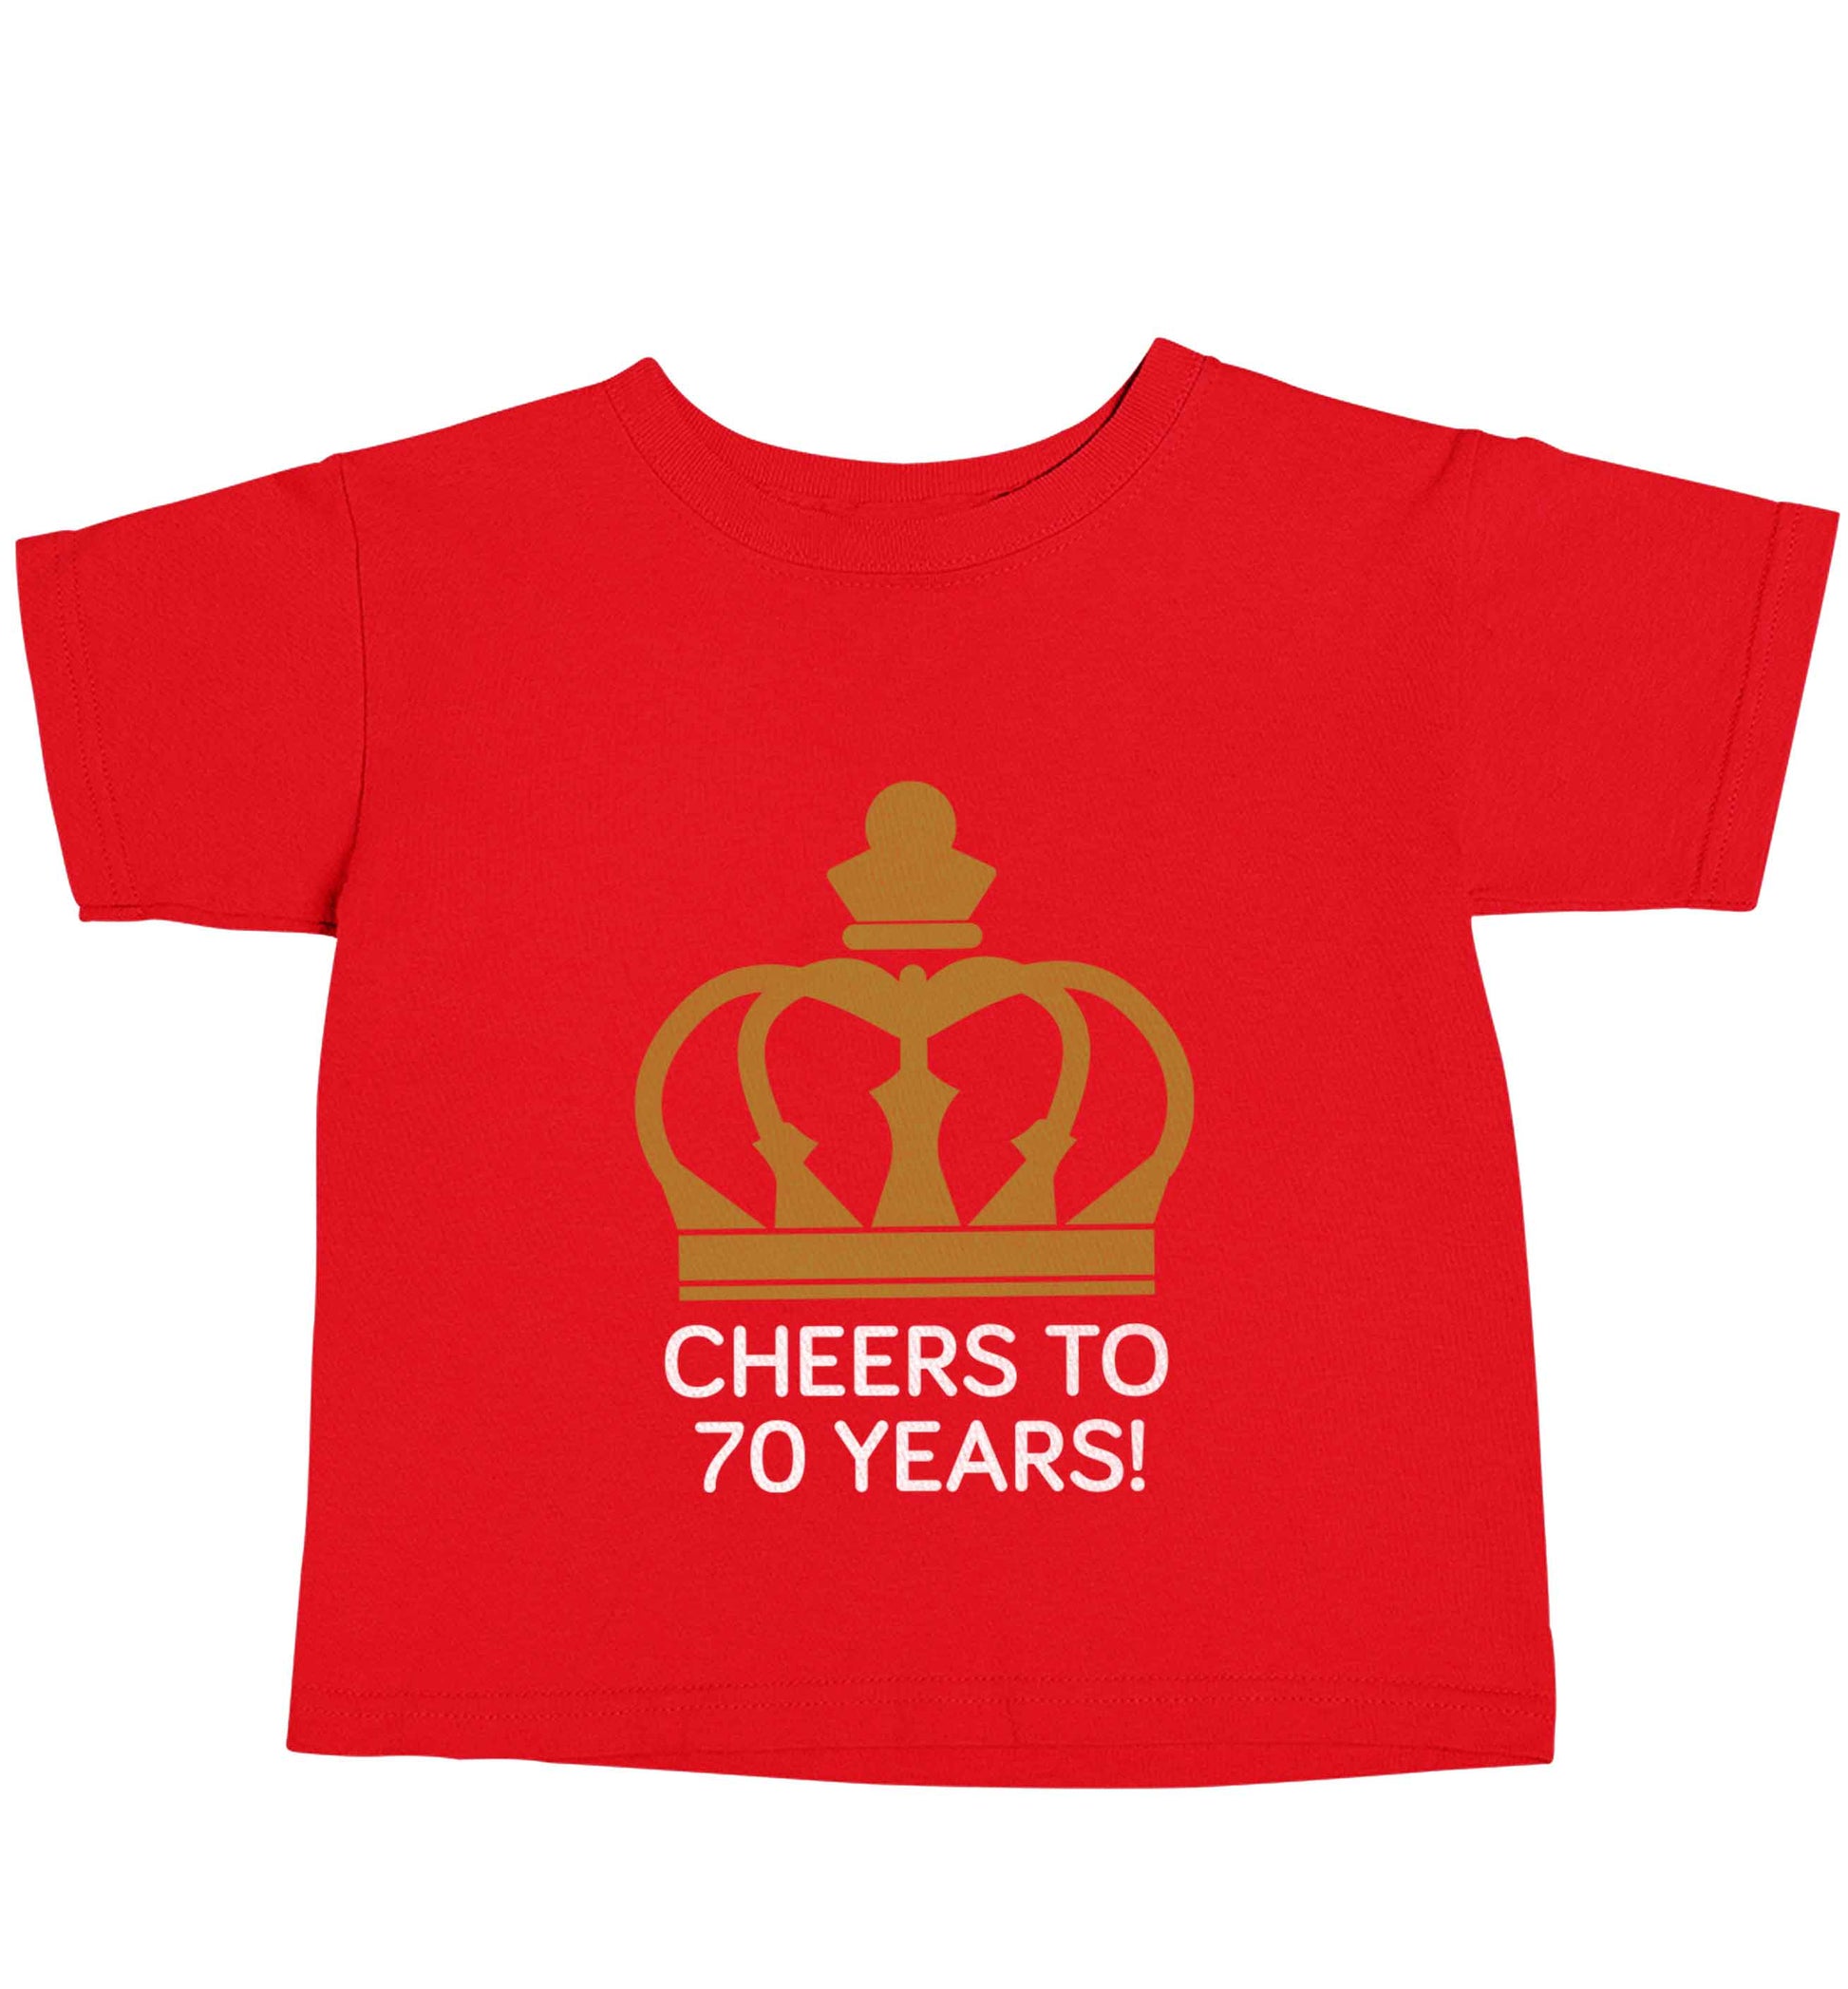 Cheers to 70 years! red baby toddler Tshirt 2 Years